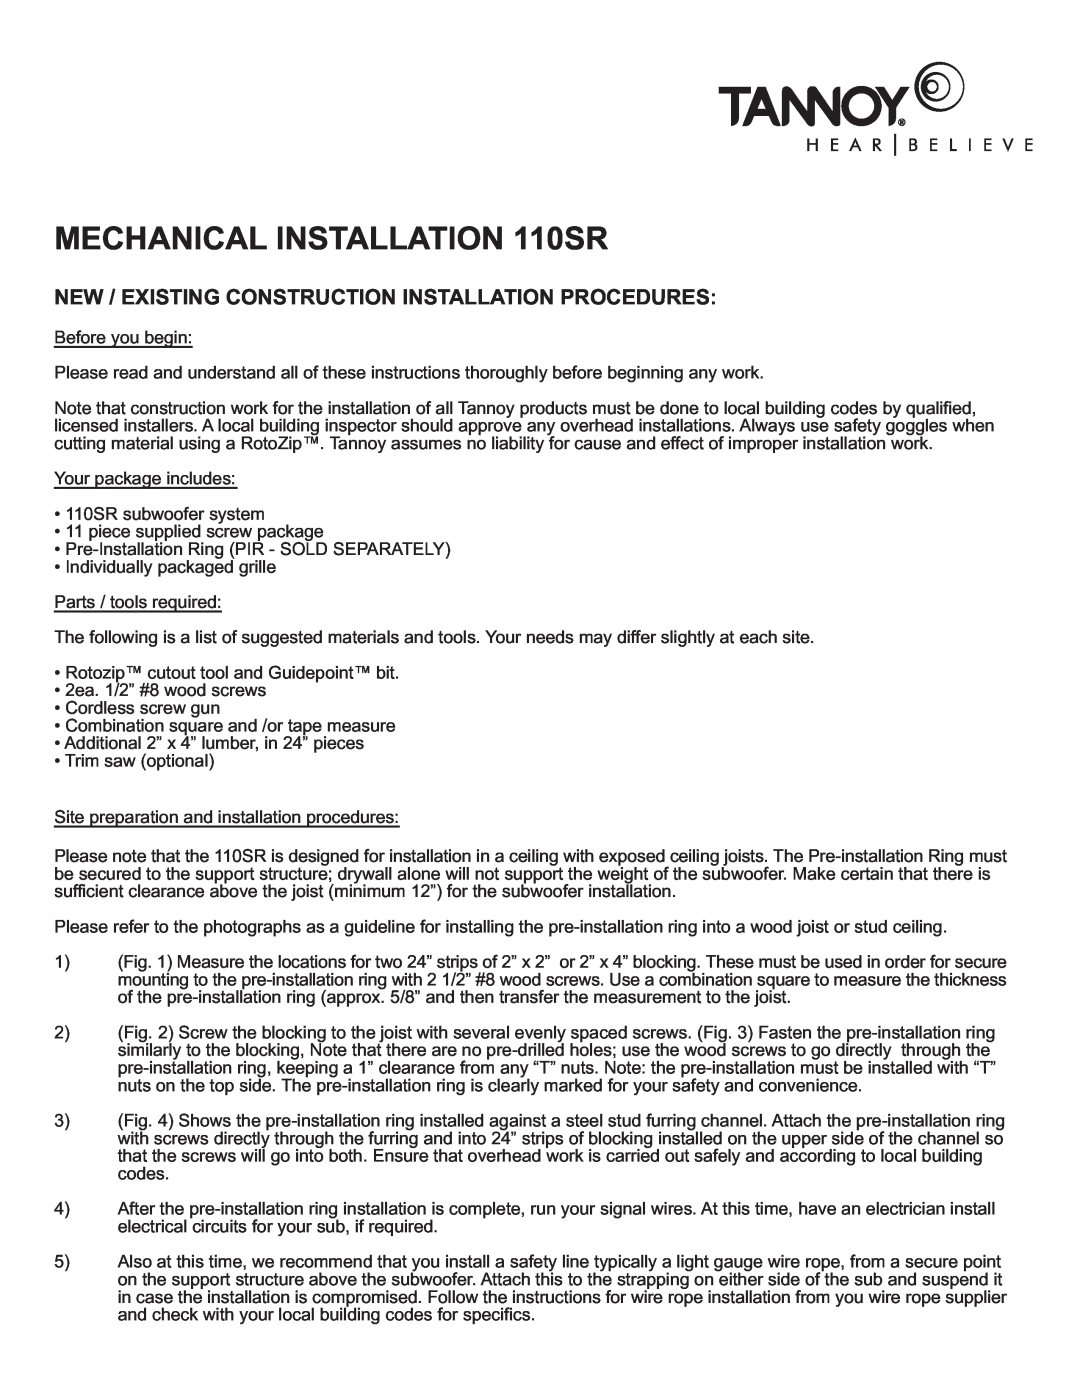 TOA Electronics owner manual MECHANICAL INSTALLATION 110SR 